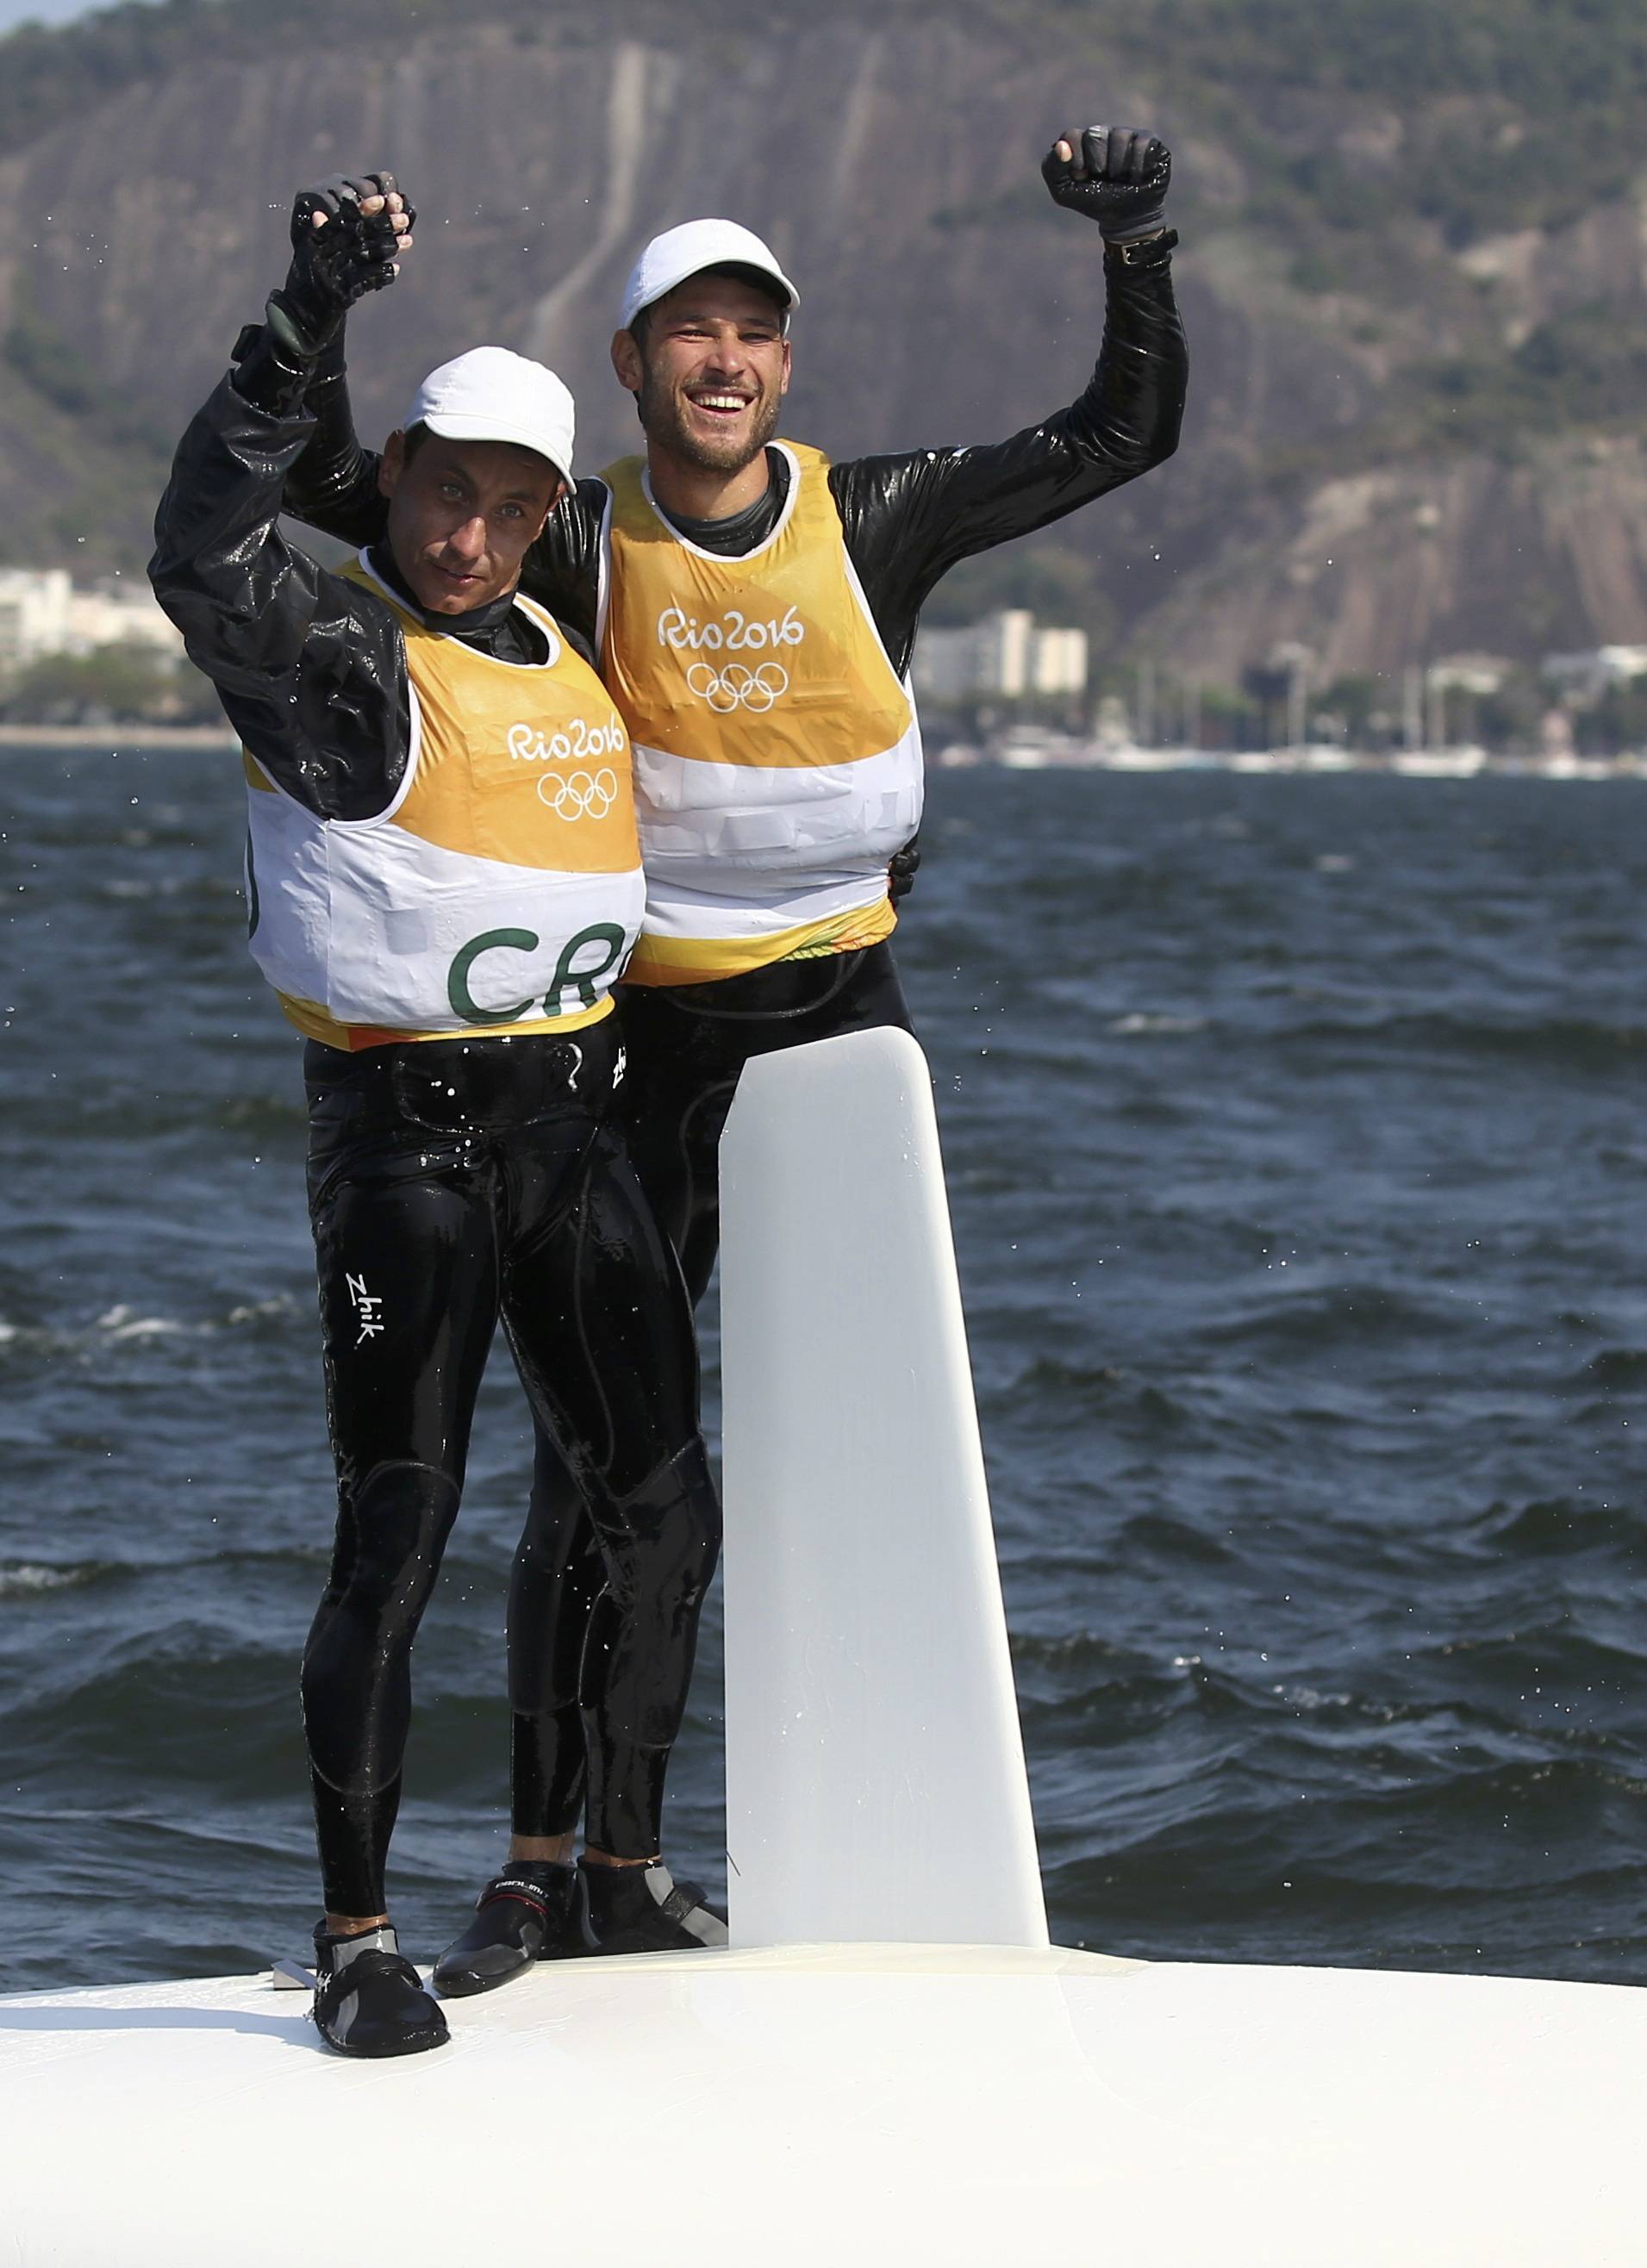 Sailing - Men's Two Person Dinghy - 470 - Medal Race